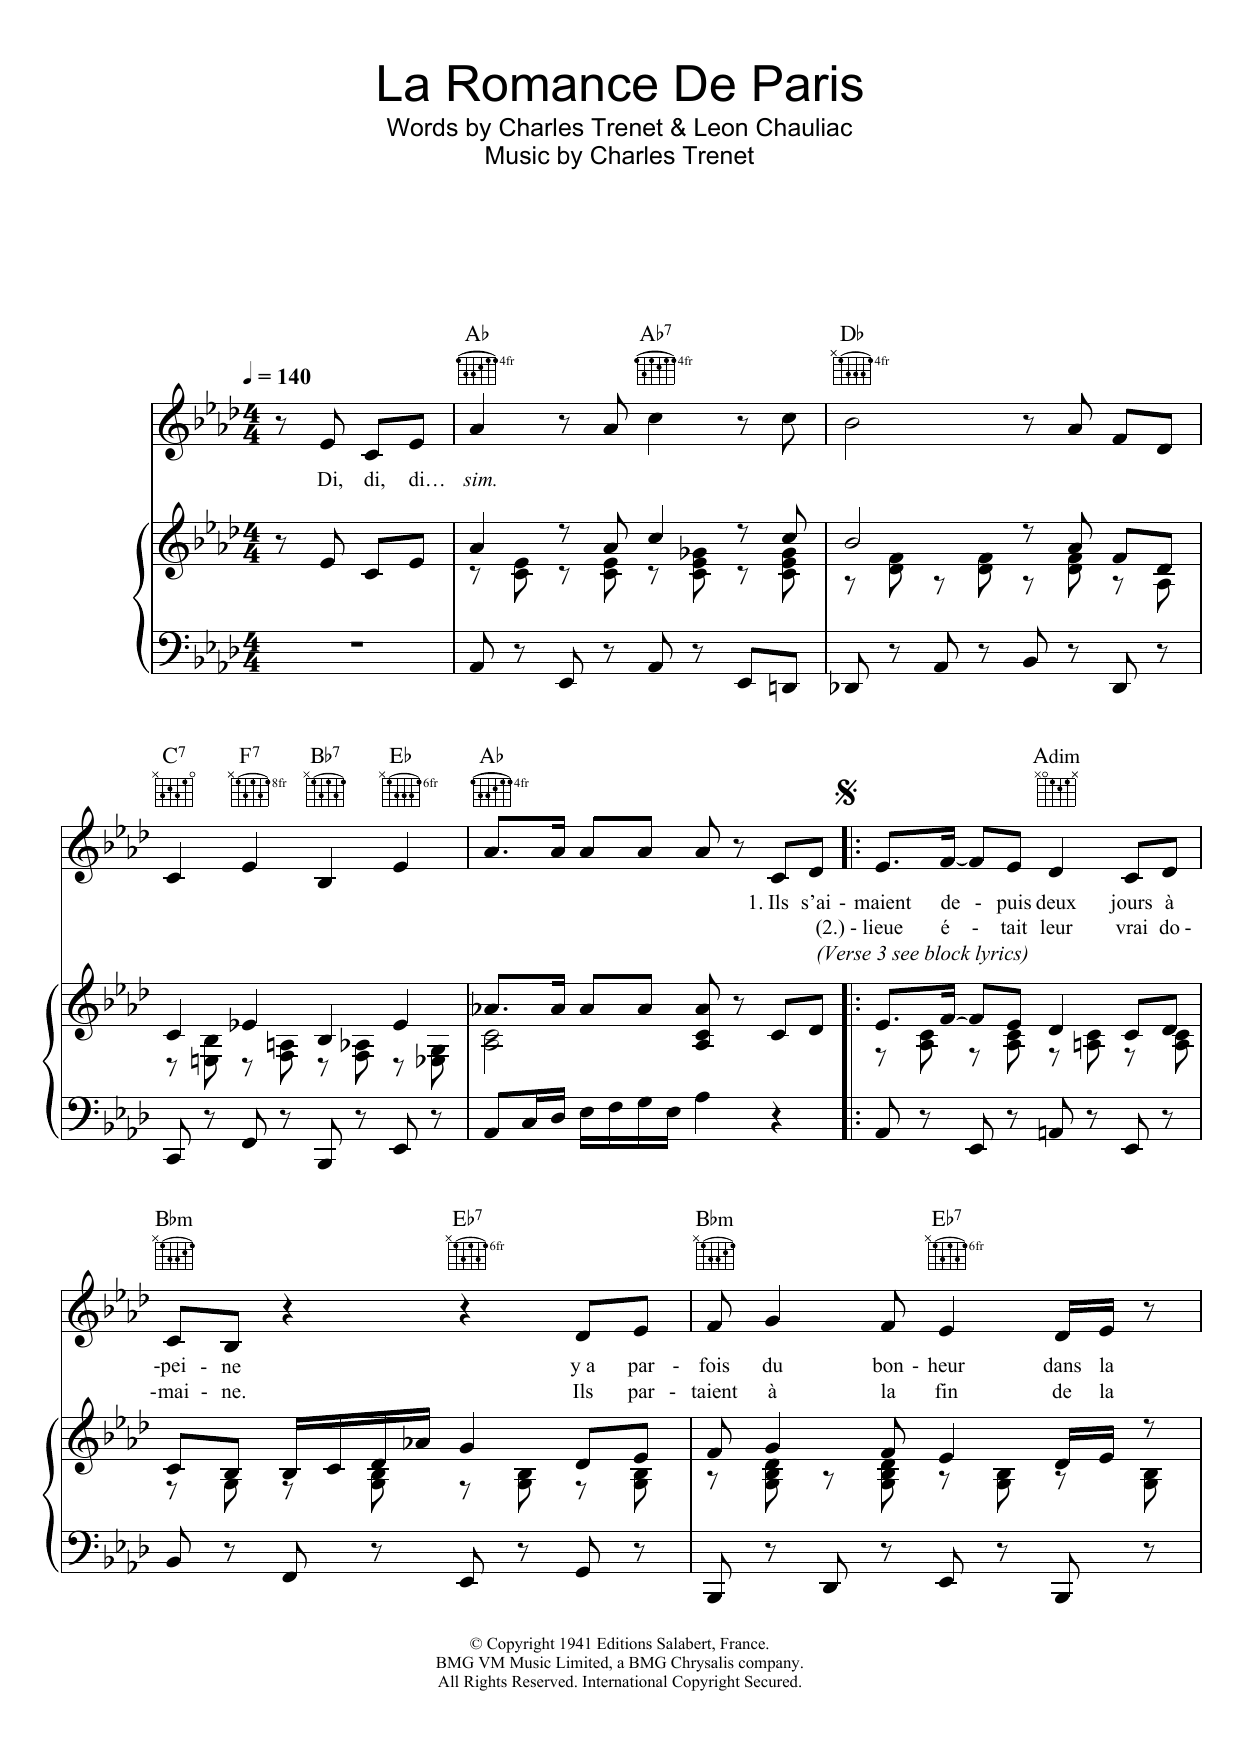 Zaz La Romance De Paris Sheet Music Notes & Chords for Piano, Vocal & Guitar (Right-Hand Melody) - Download or Print PDF